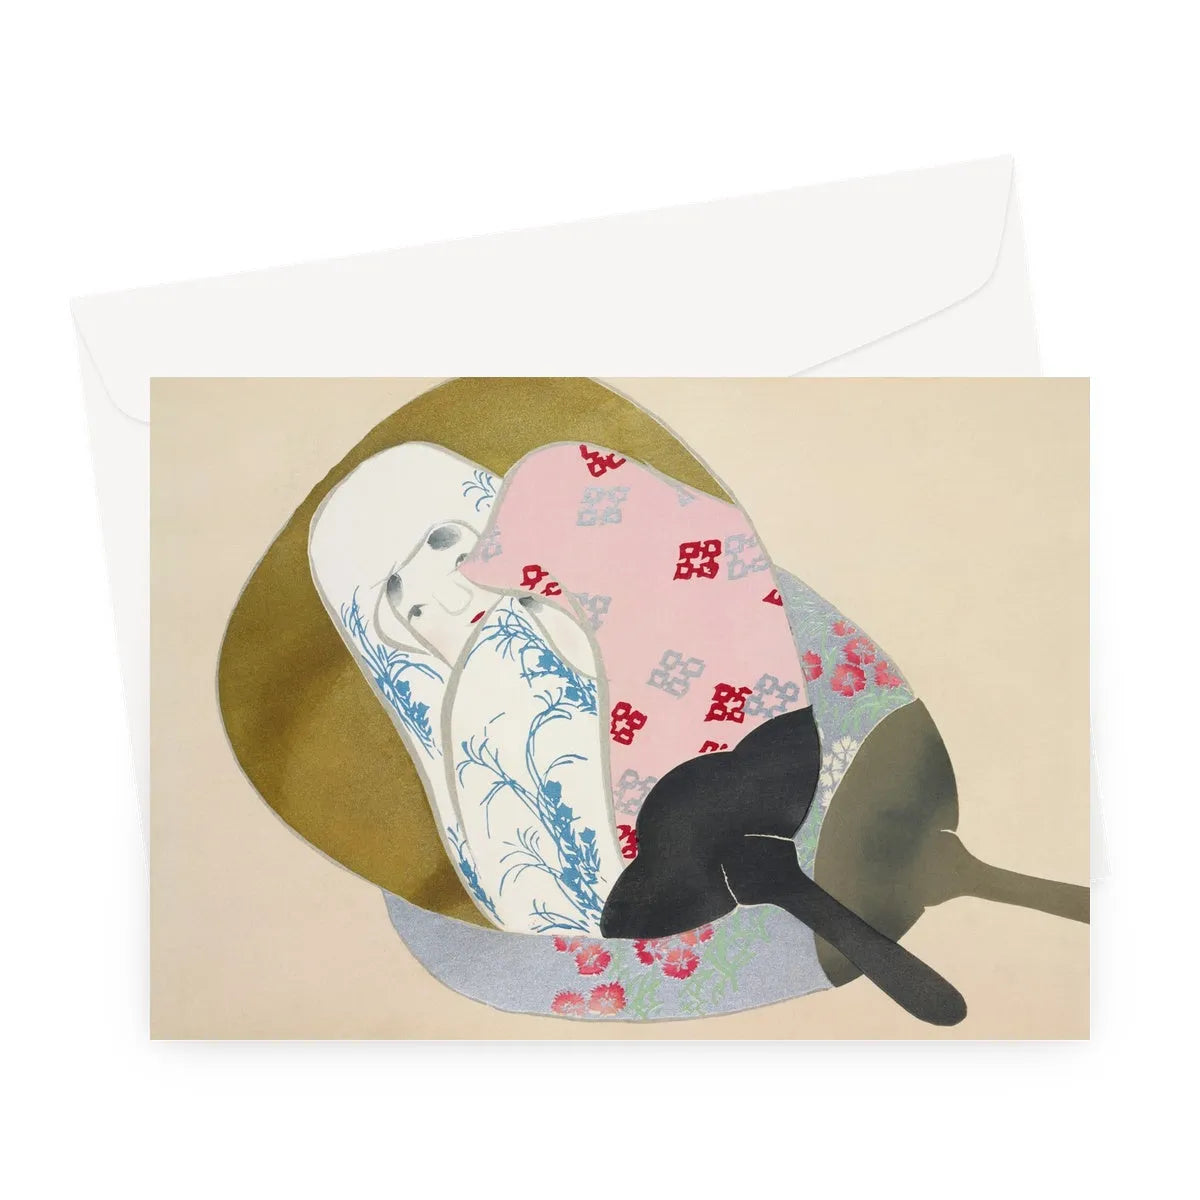 Girl In Fan By Kamisaka Sekka Greeting Card - A5 Landscape / 1 Card - Greeting & Note Cards - Aesthetic Art